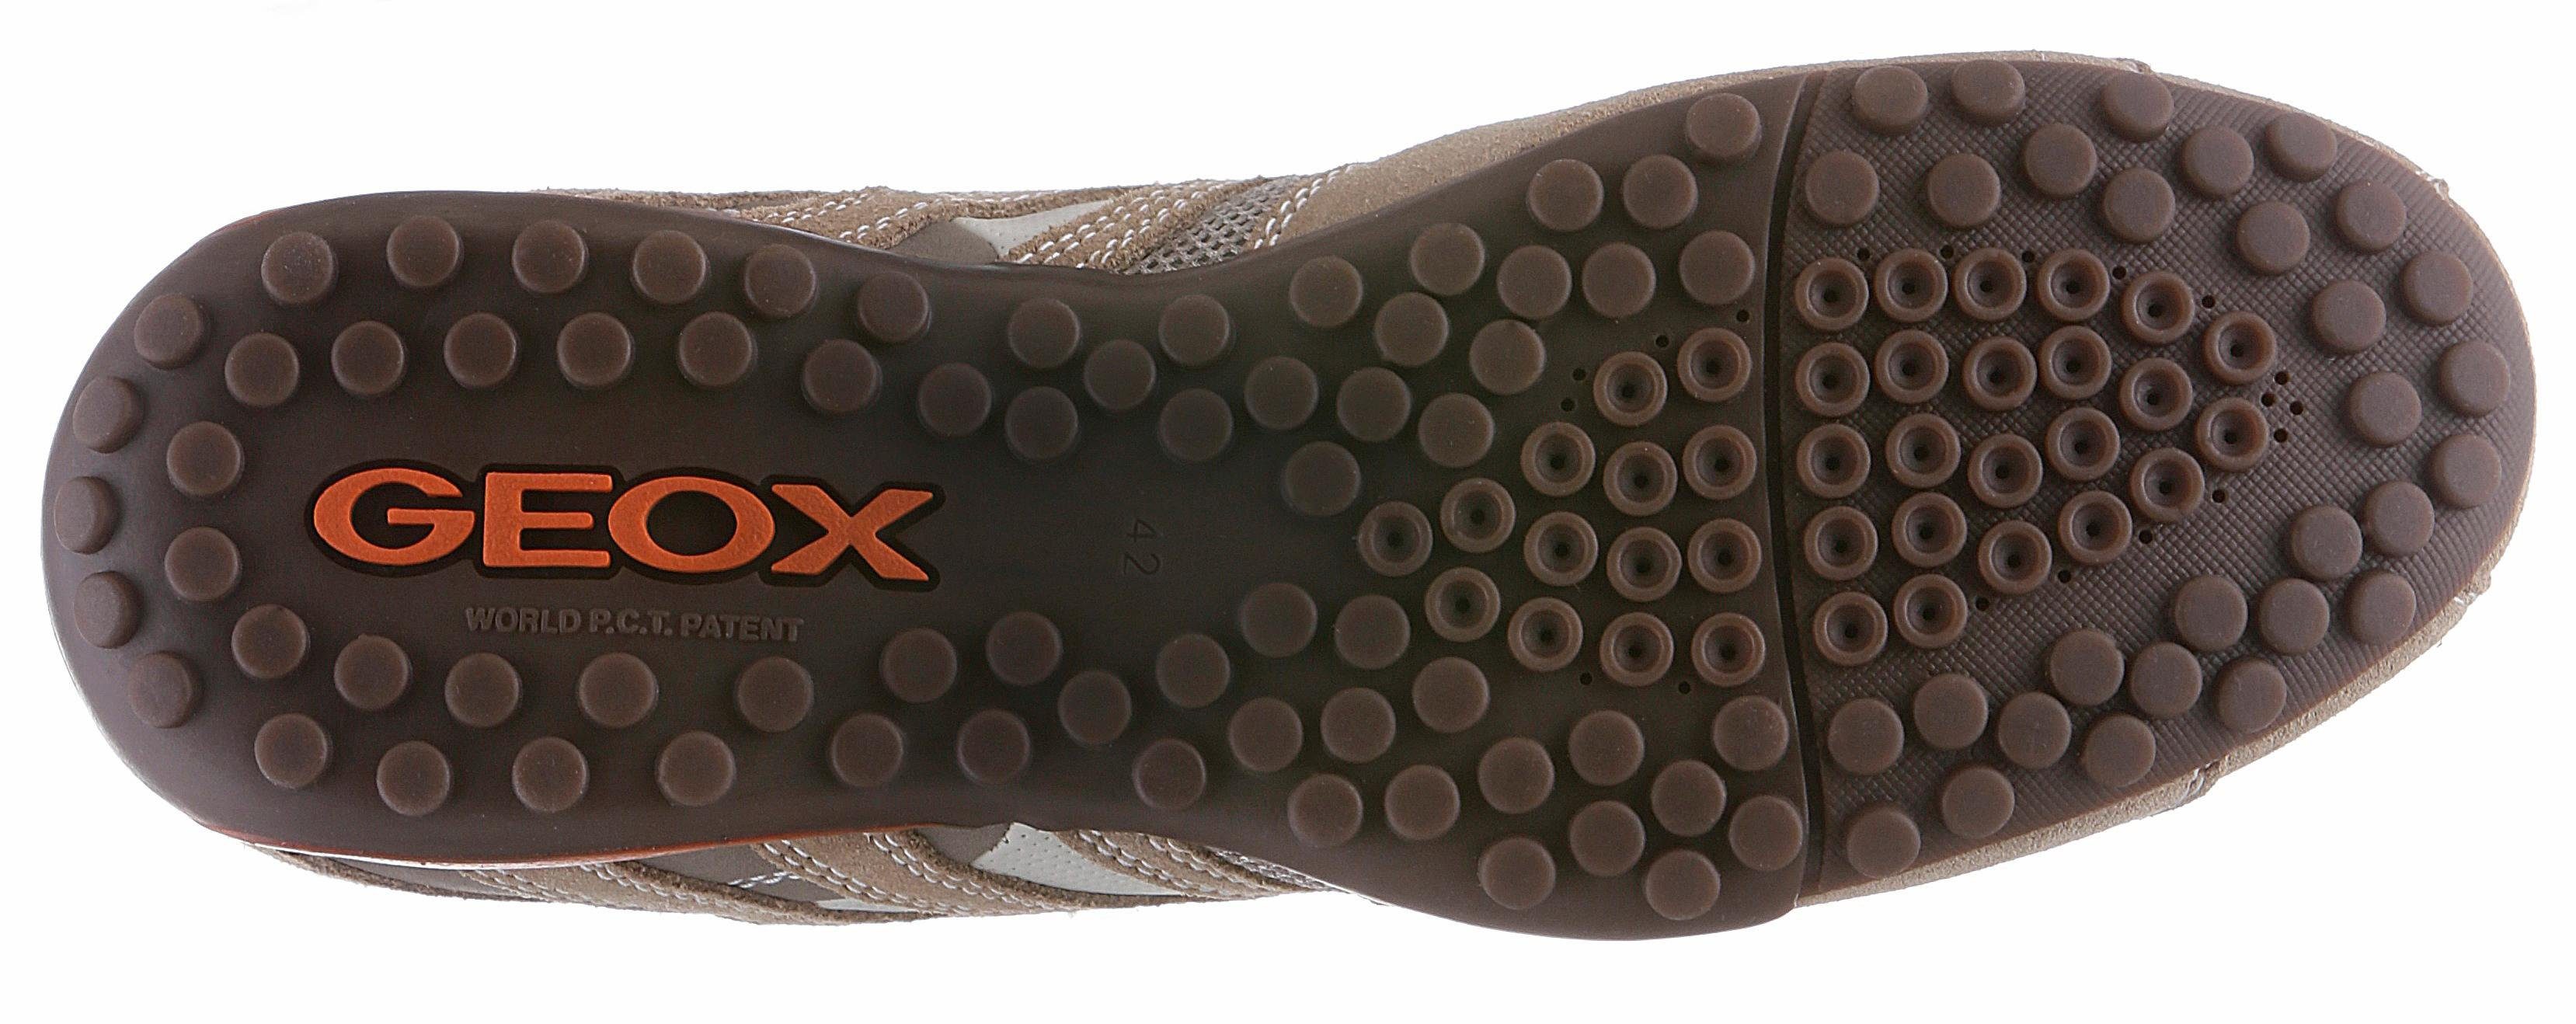 Geox Snake Sneaker mit Membrane im Materialmix Spezial beige Geox